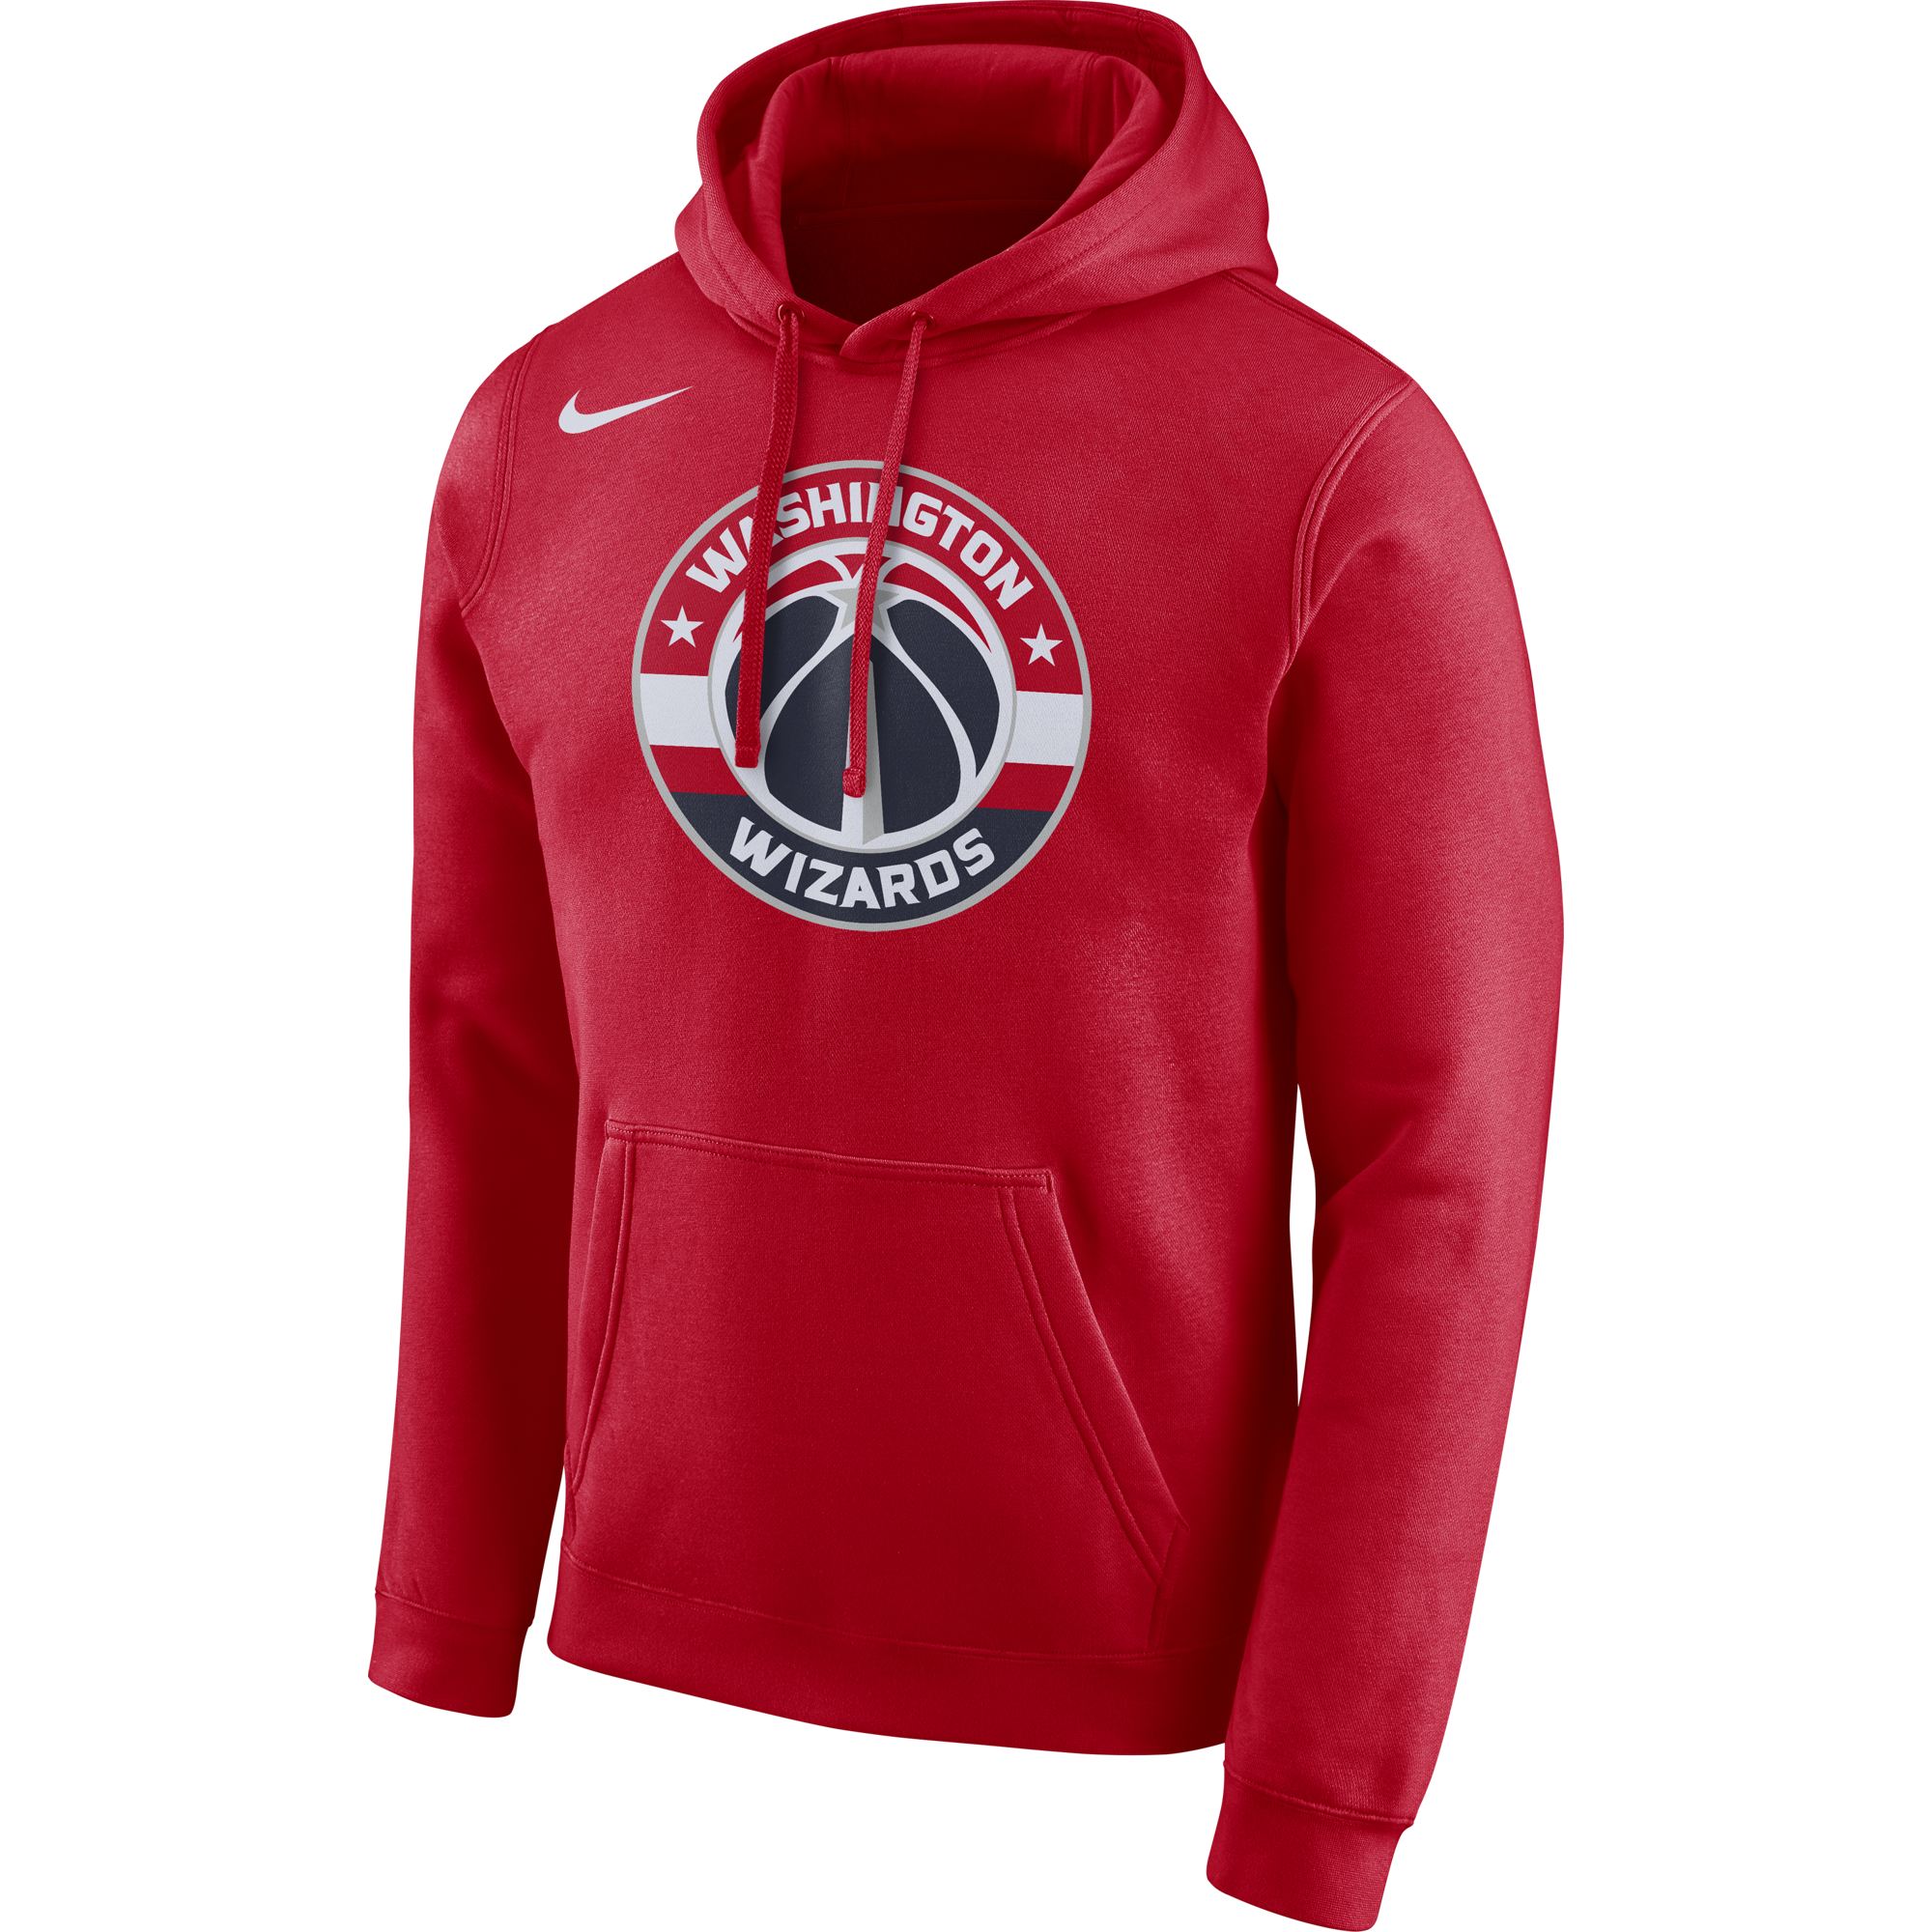 Nike Nba Washington Wizards Logo Hoodie For 50 00 Kicksmaniac Com